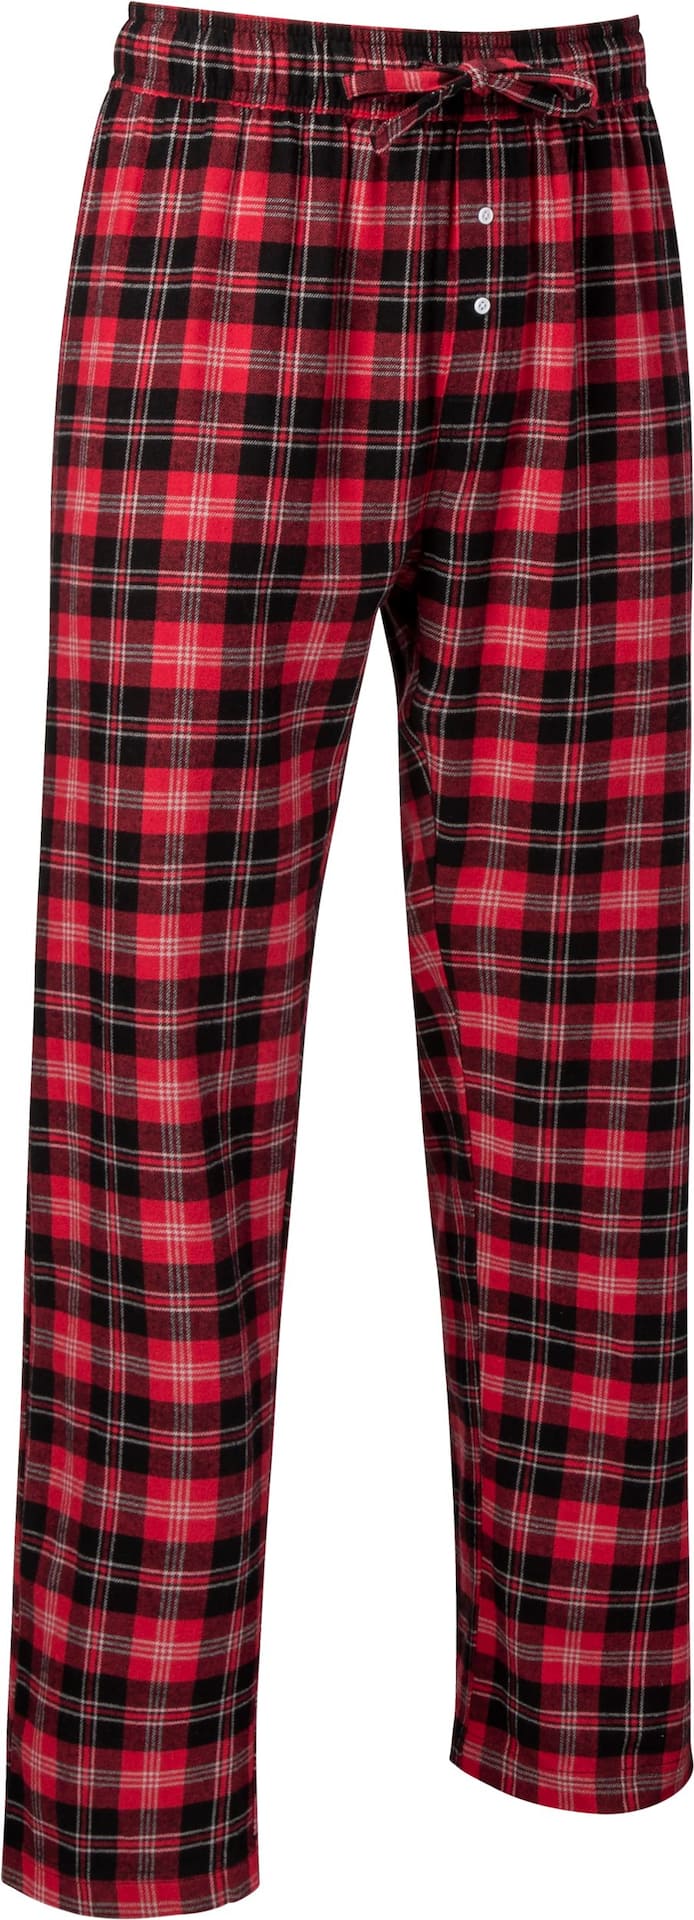 NWT Old Navy Black Thermal Knit Pajama Pants Sleep Leggings Lounge